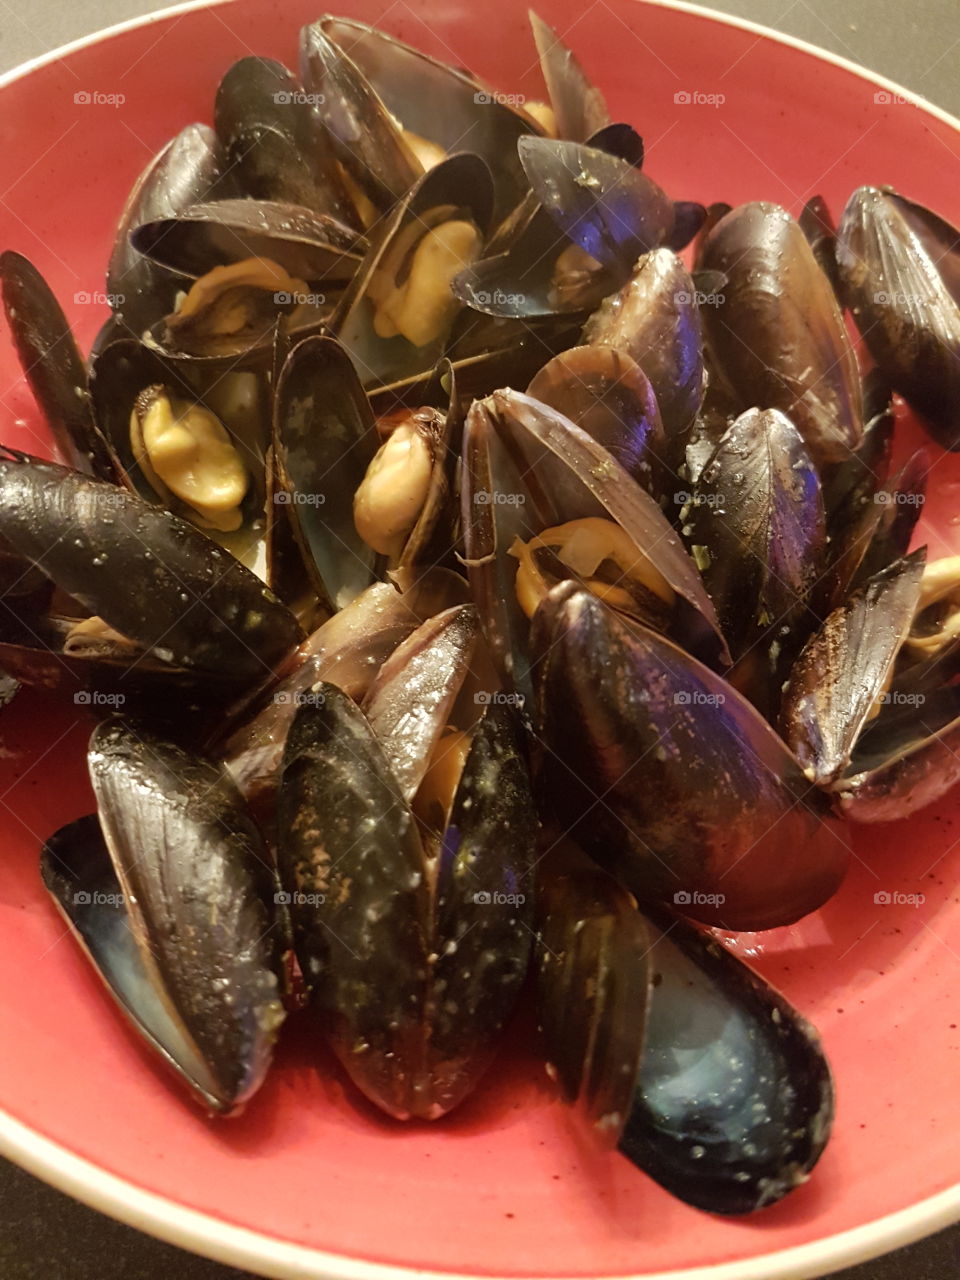 Mussels in garlic sauce